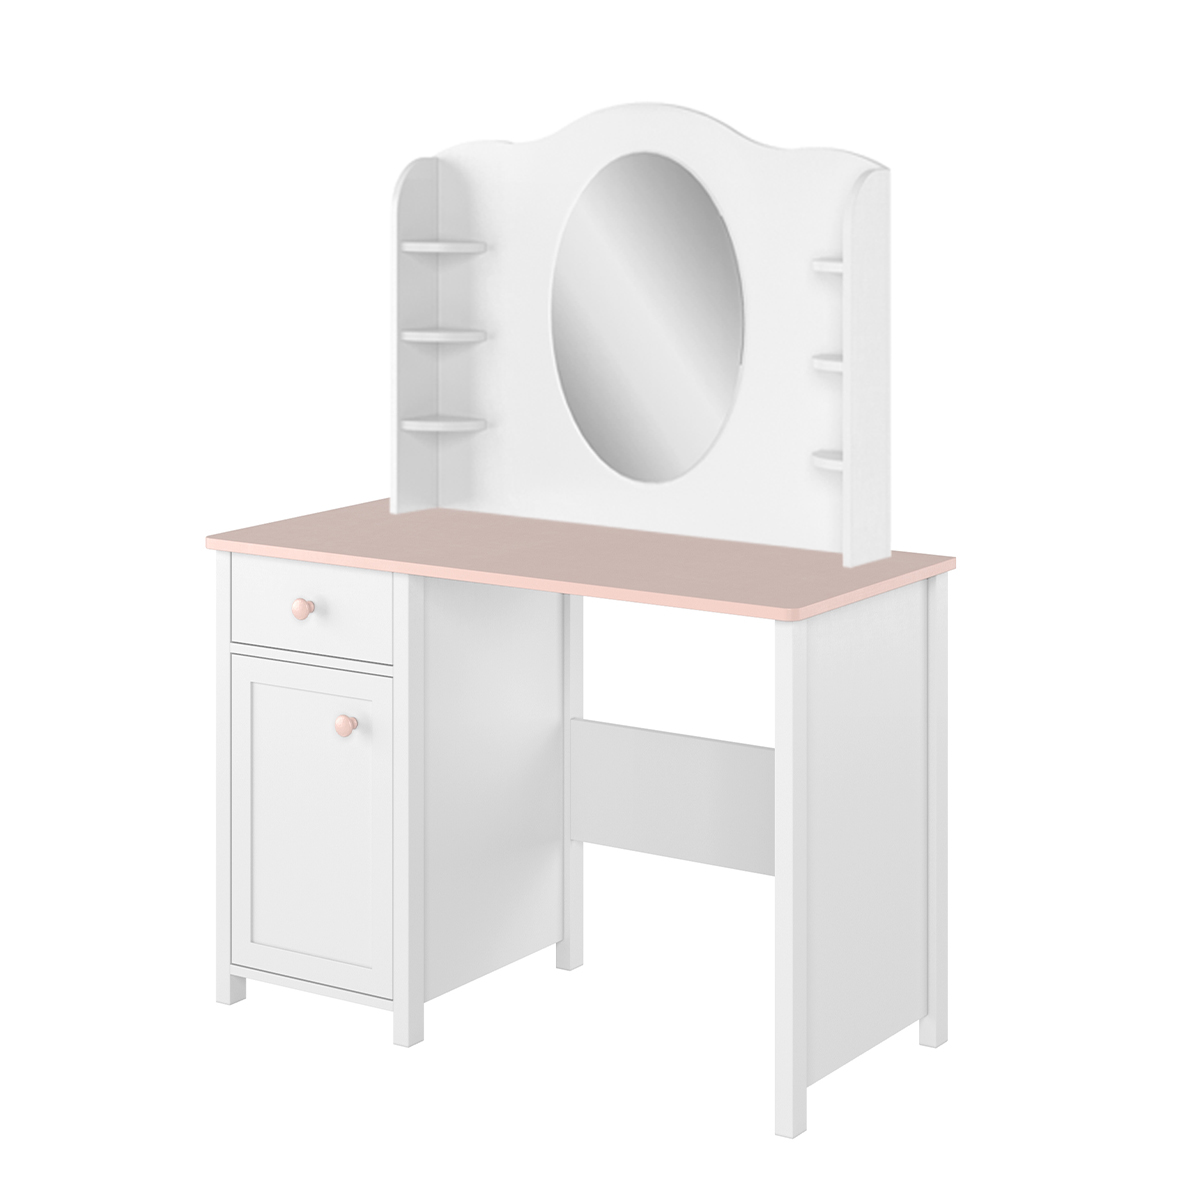 petits-meubles-alissa-LN06BR-bureau-coiffeuse-1-porte-1-tiroir-blanc-rose-01